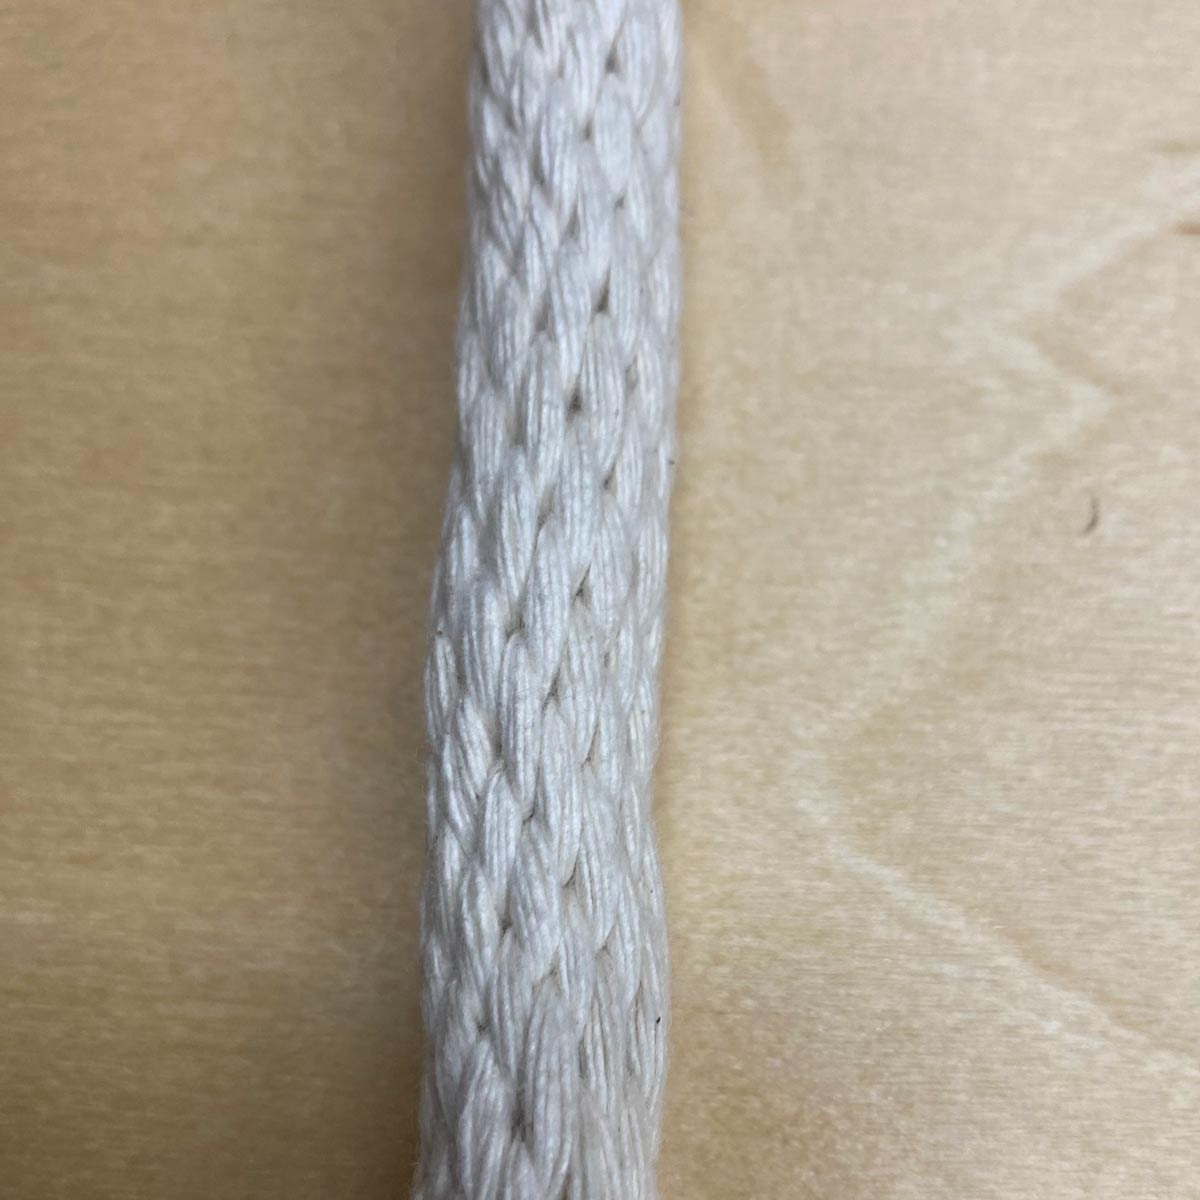 Sash Cord - White #10 Cotton and Nylon Rope - 5/16 Inch x 100 Ft Rope